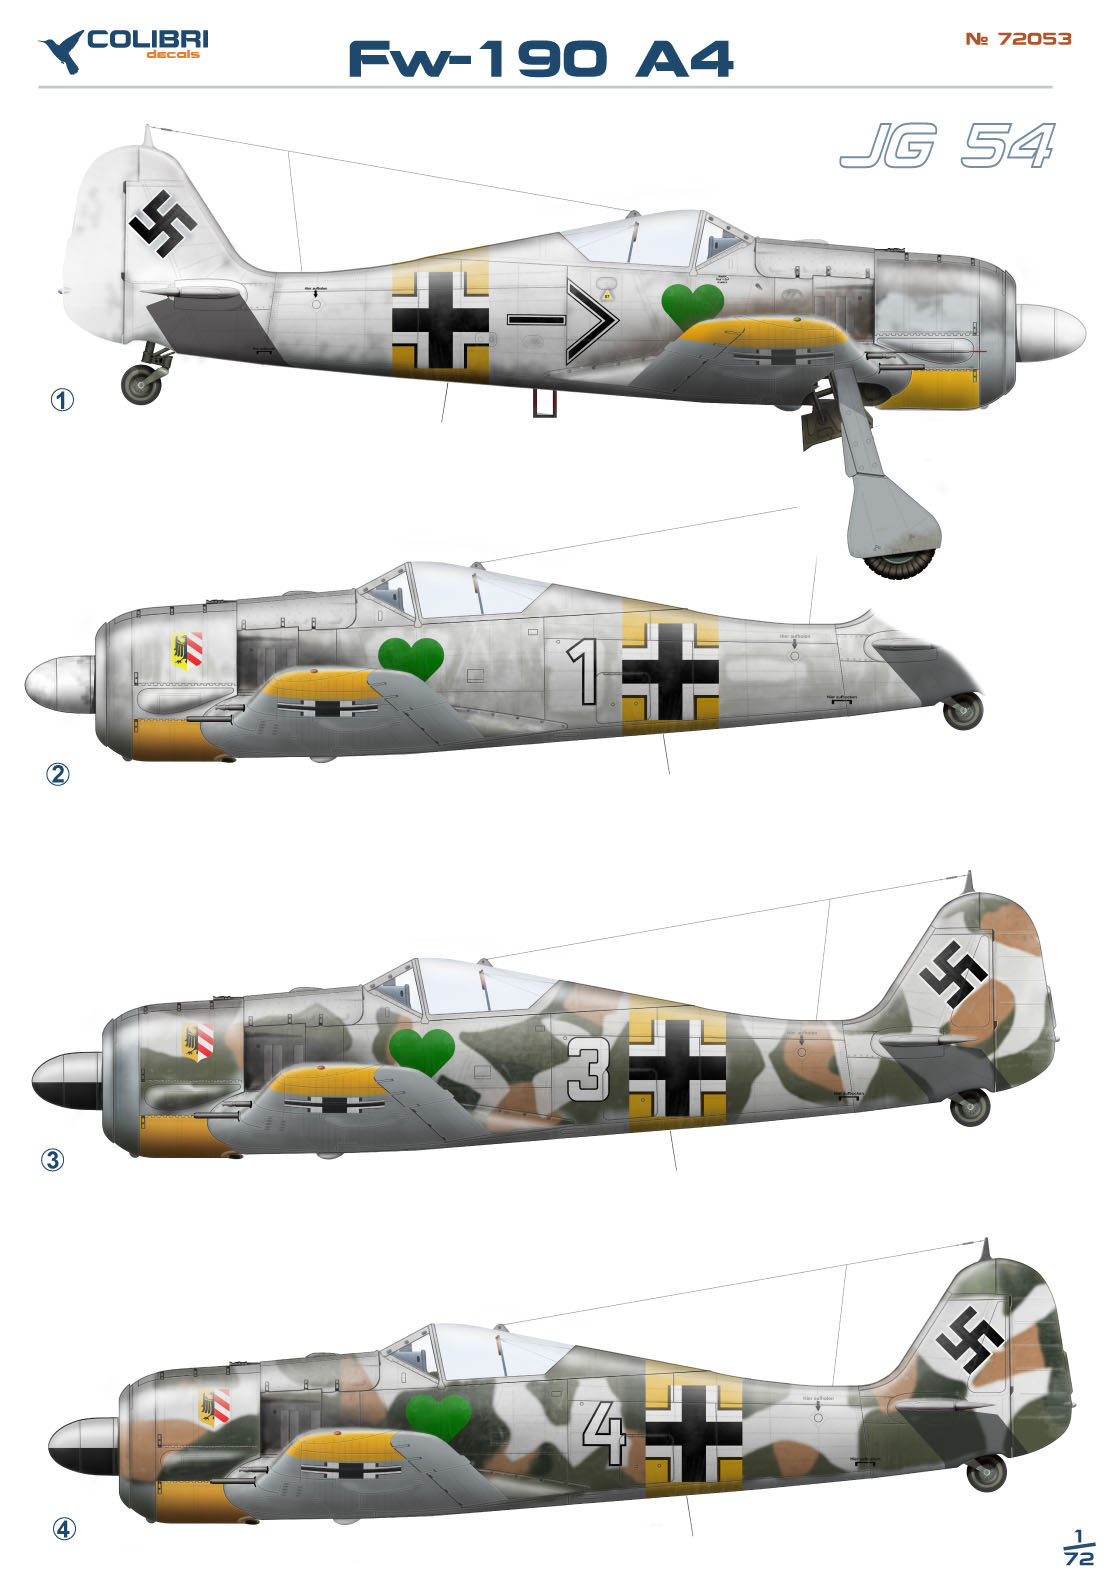 Decal 1/72 Fw-190 A4 Jg 54 (Colibri Decals)